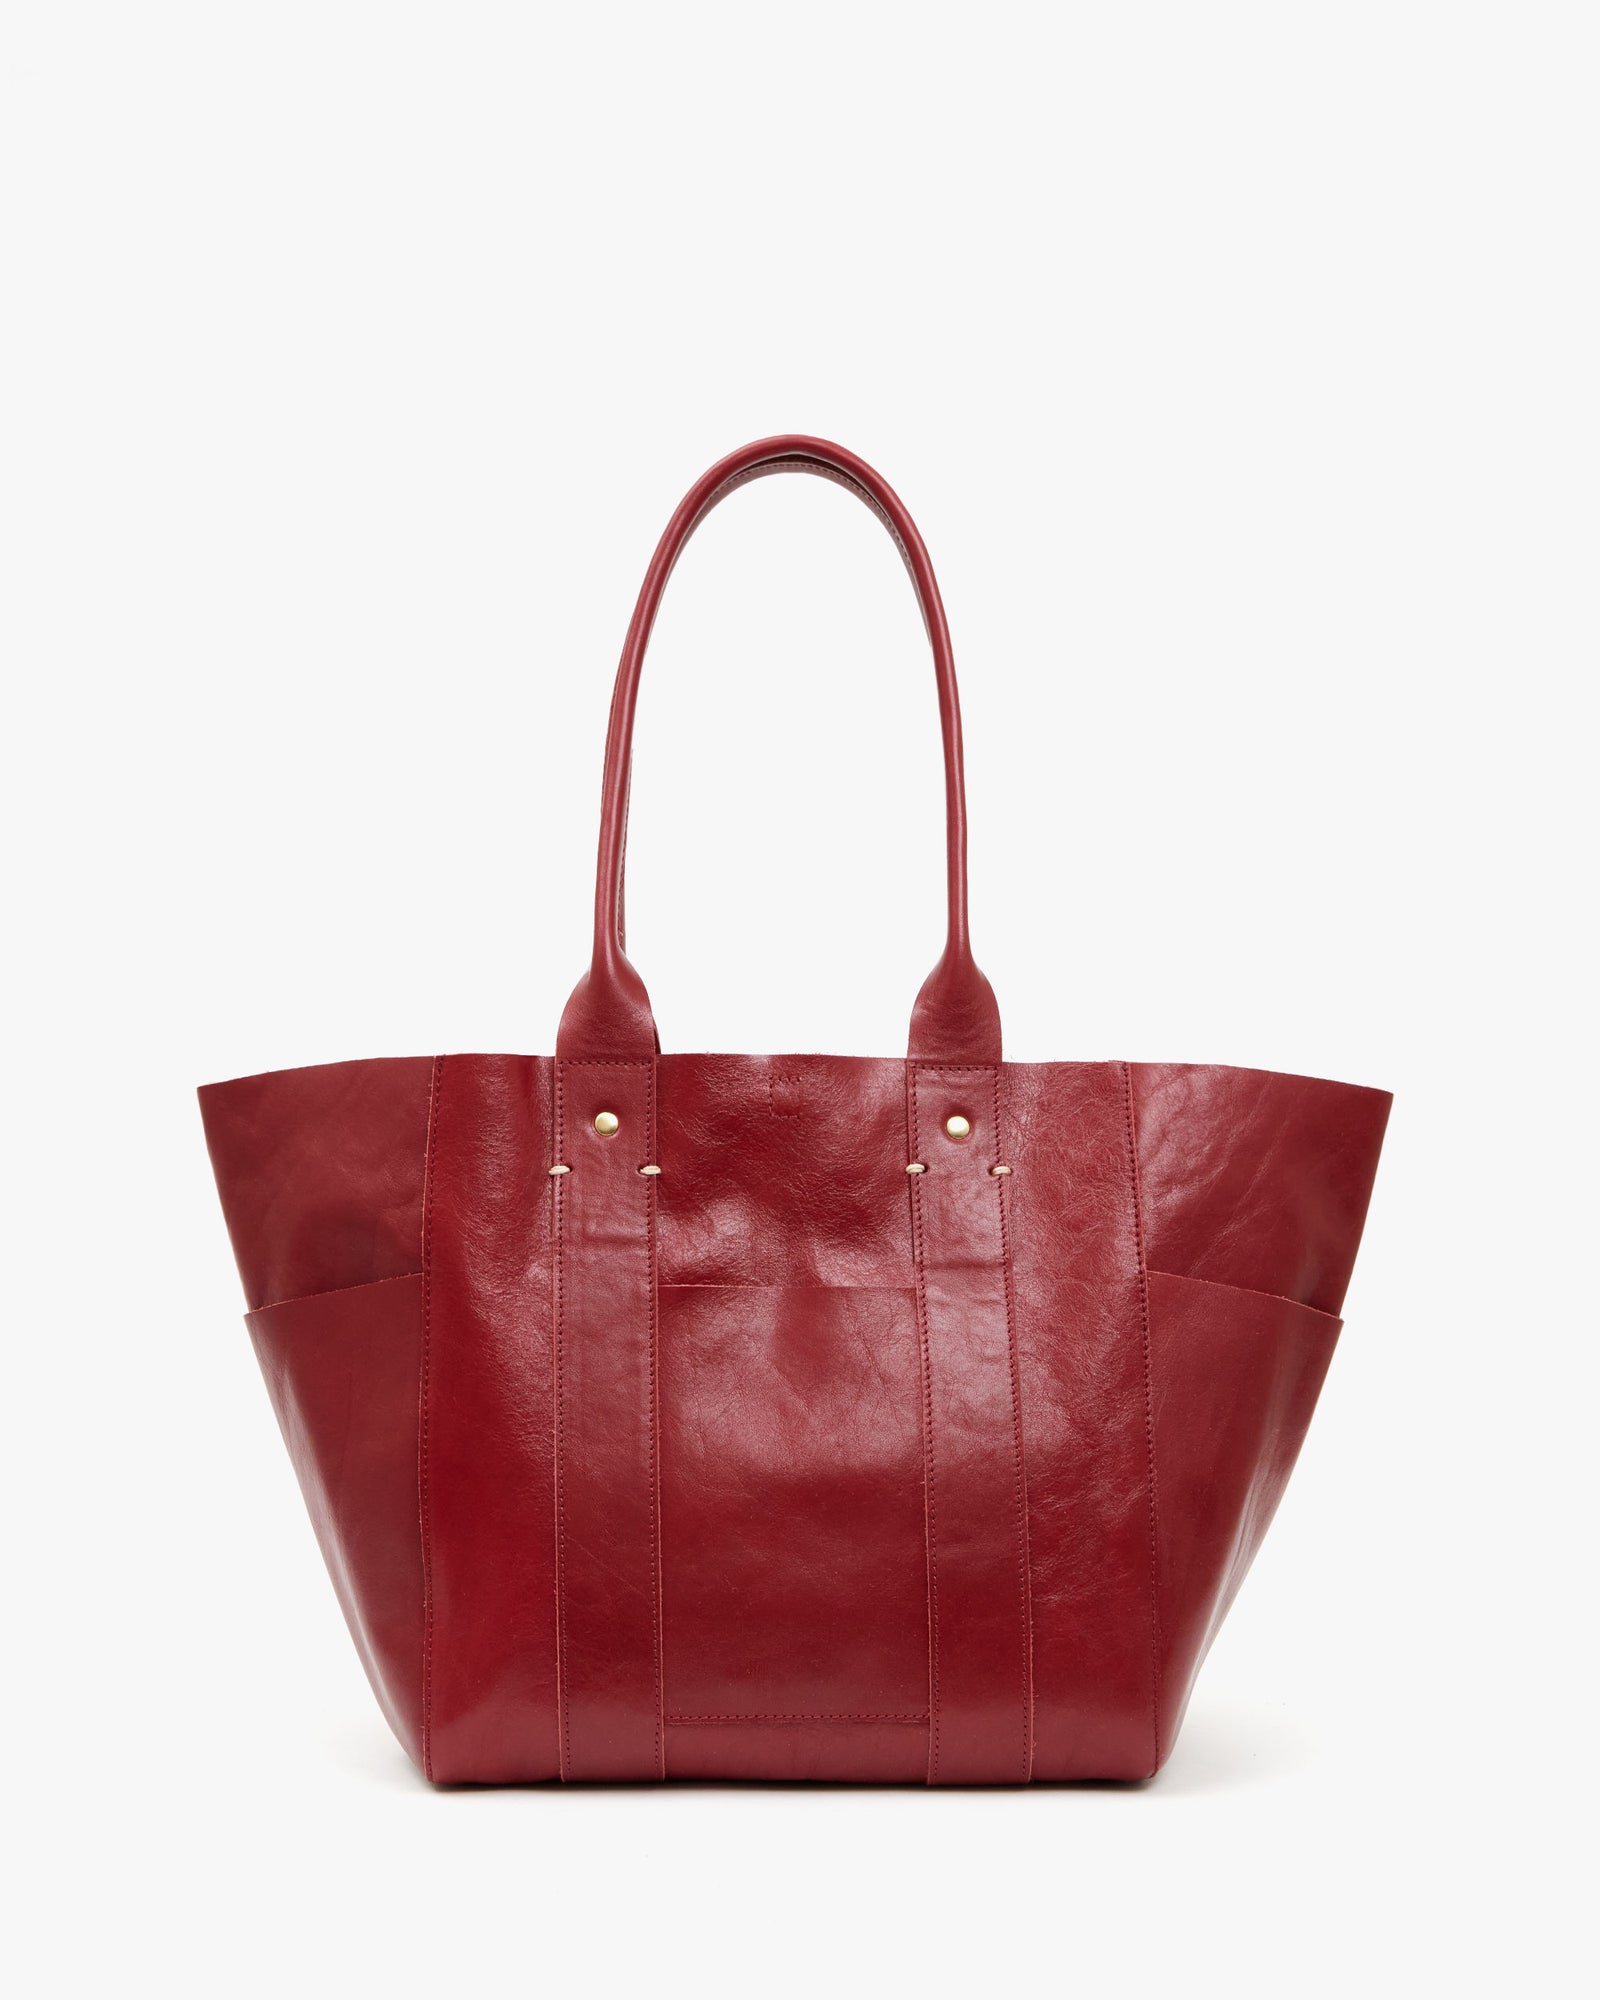 CLARE V. Le Box Bag  Bags, Clare v., Handbags